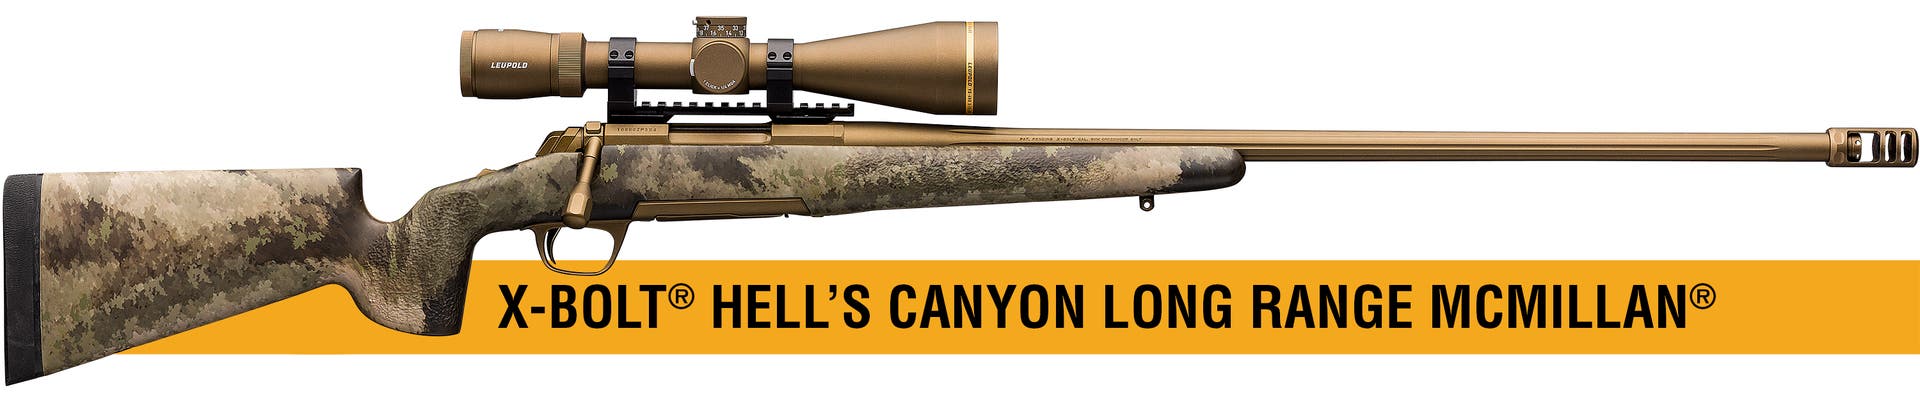 X-Bolt Hell's Canyon Long Range McMillan